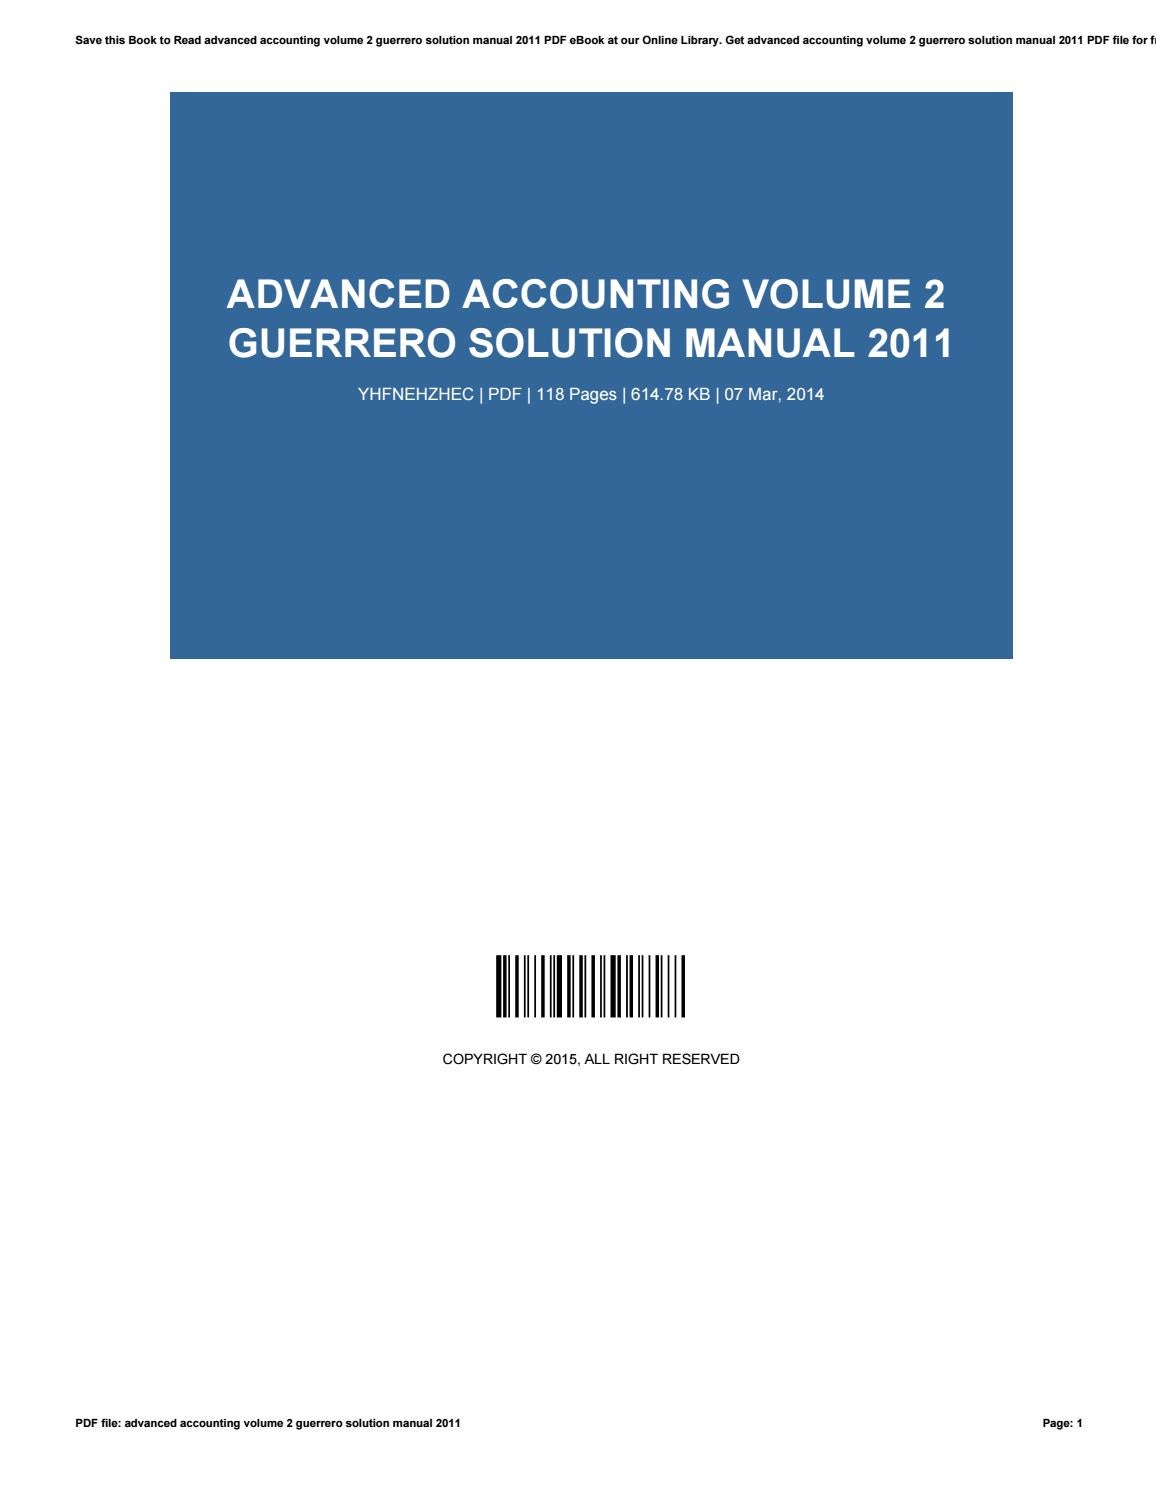 advanced accounting 2 guerrero 2017 solution manual pdf